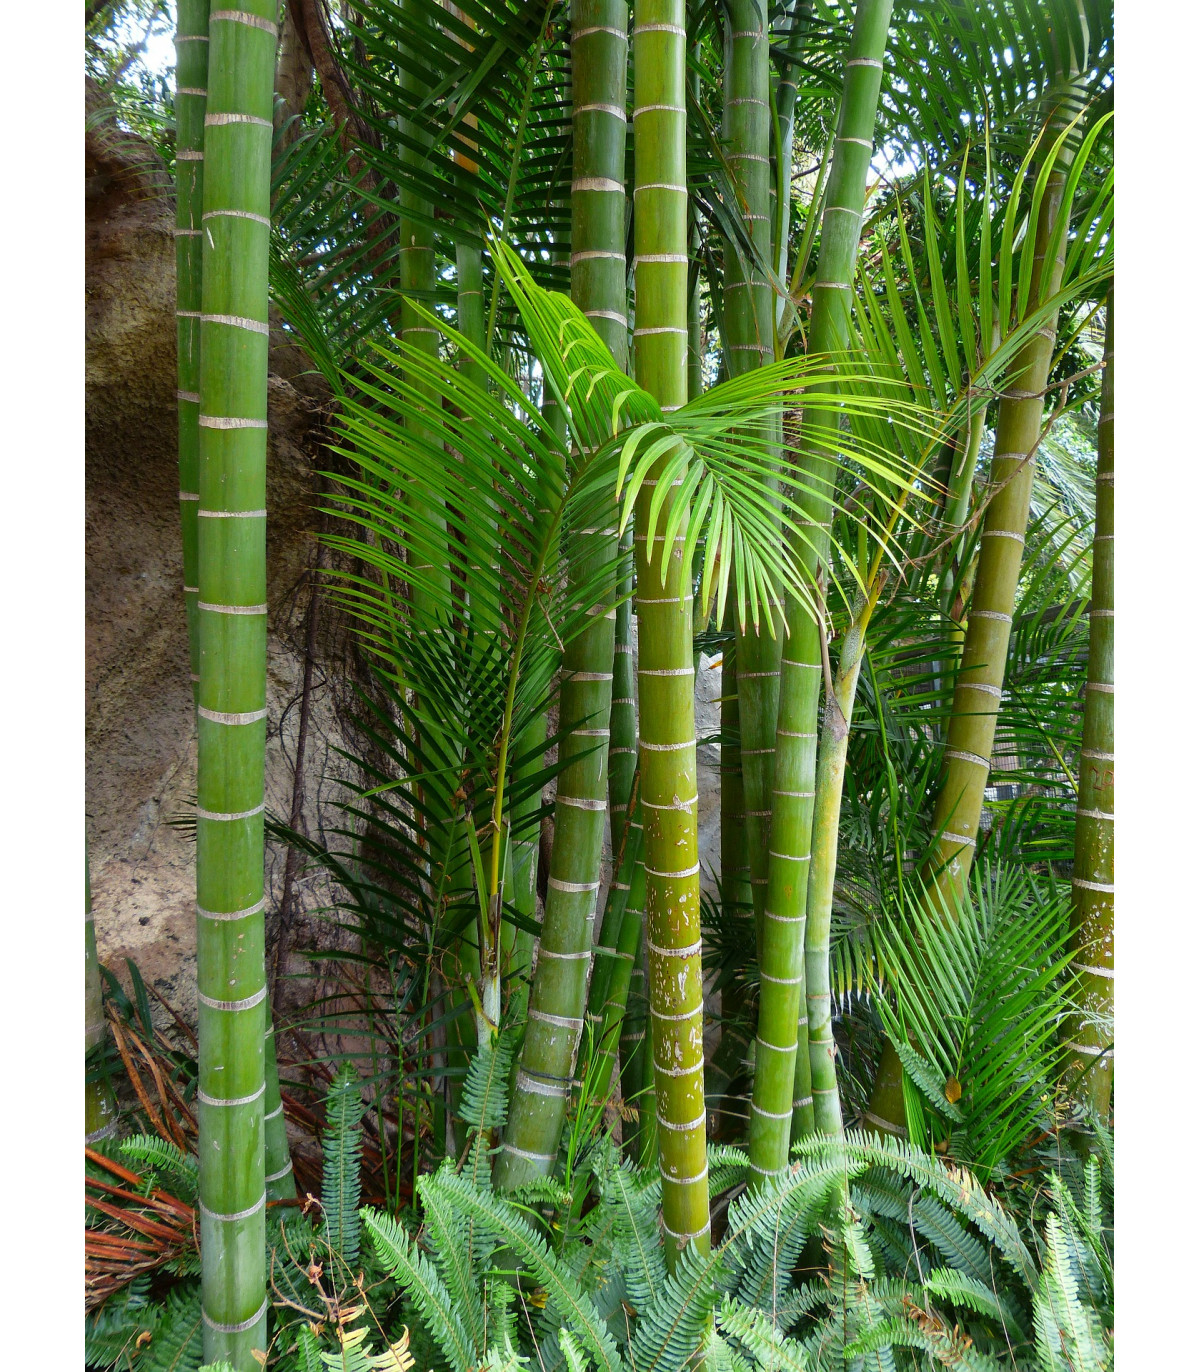 Semínka bambusu - Phyllostachys pubescens - Král bambusů - prodej semen - 3 ks